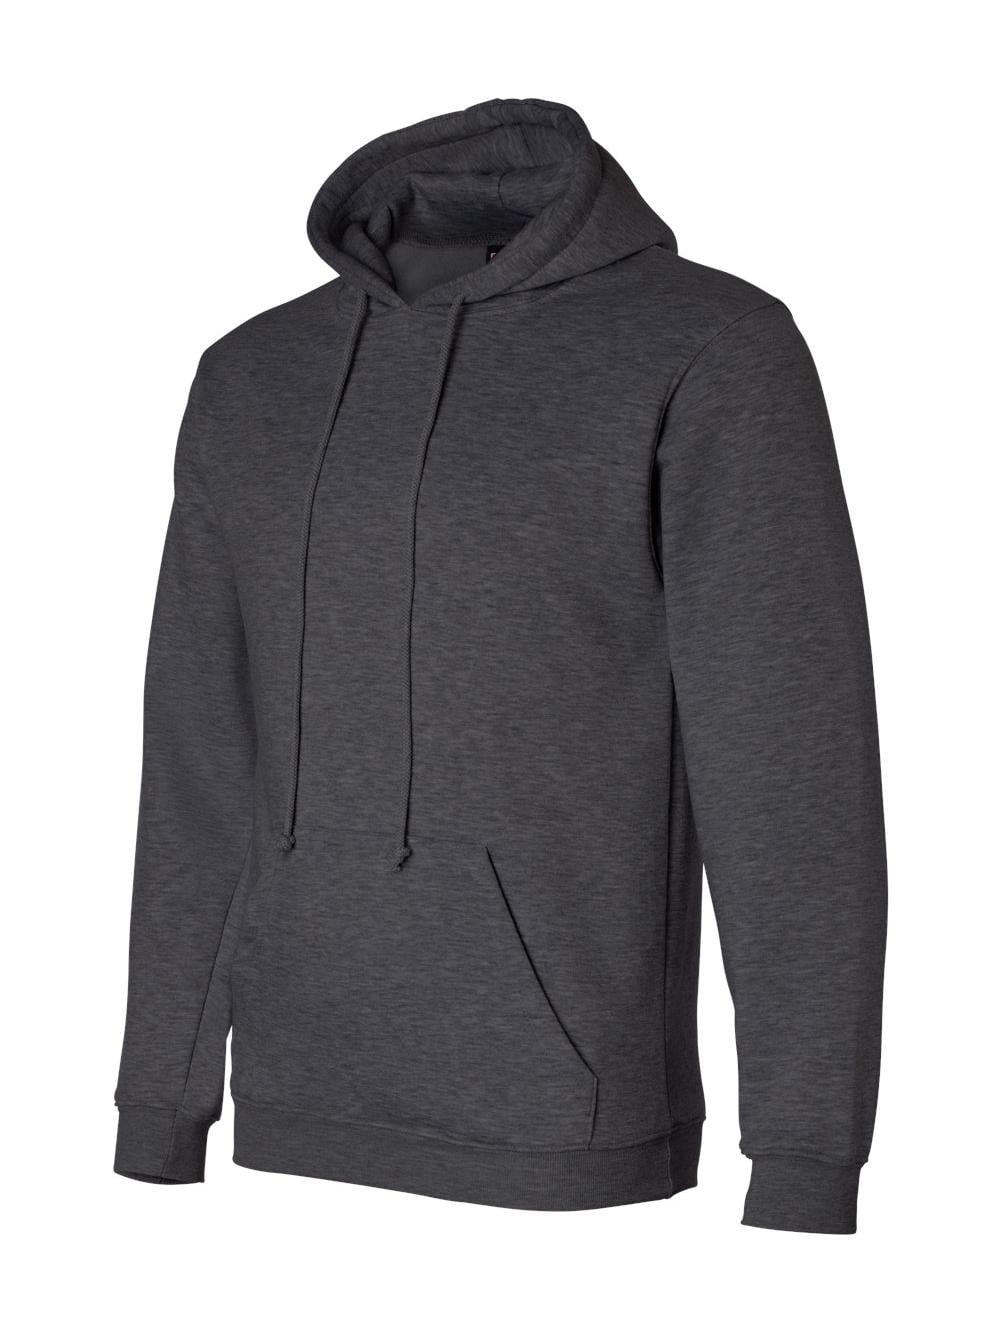 Bayside - USA-Made Hooded Sweatshirt - 960 - Walmart.com